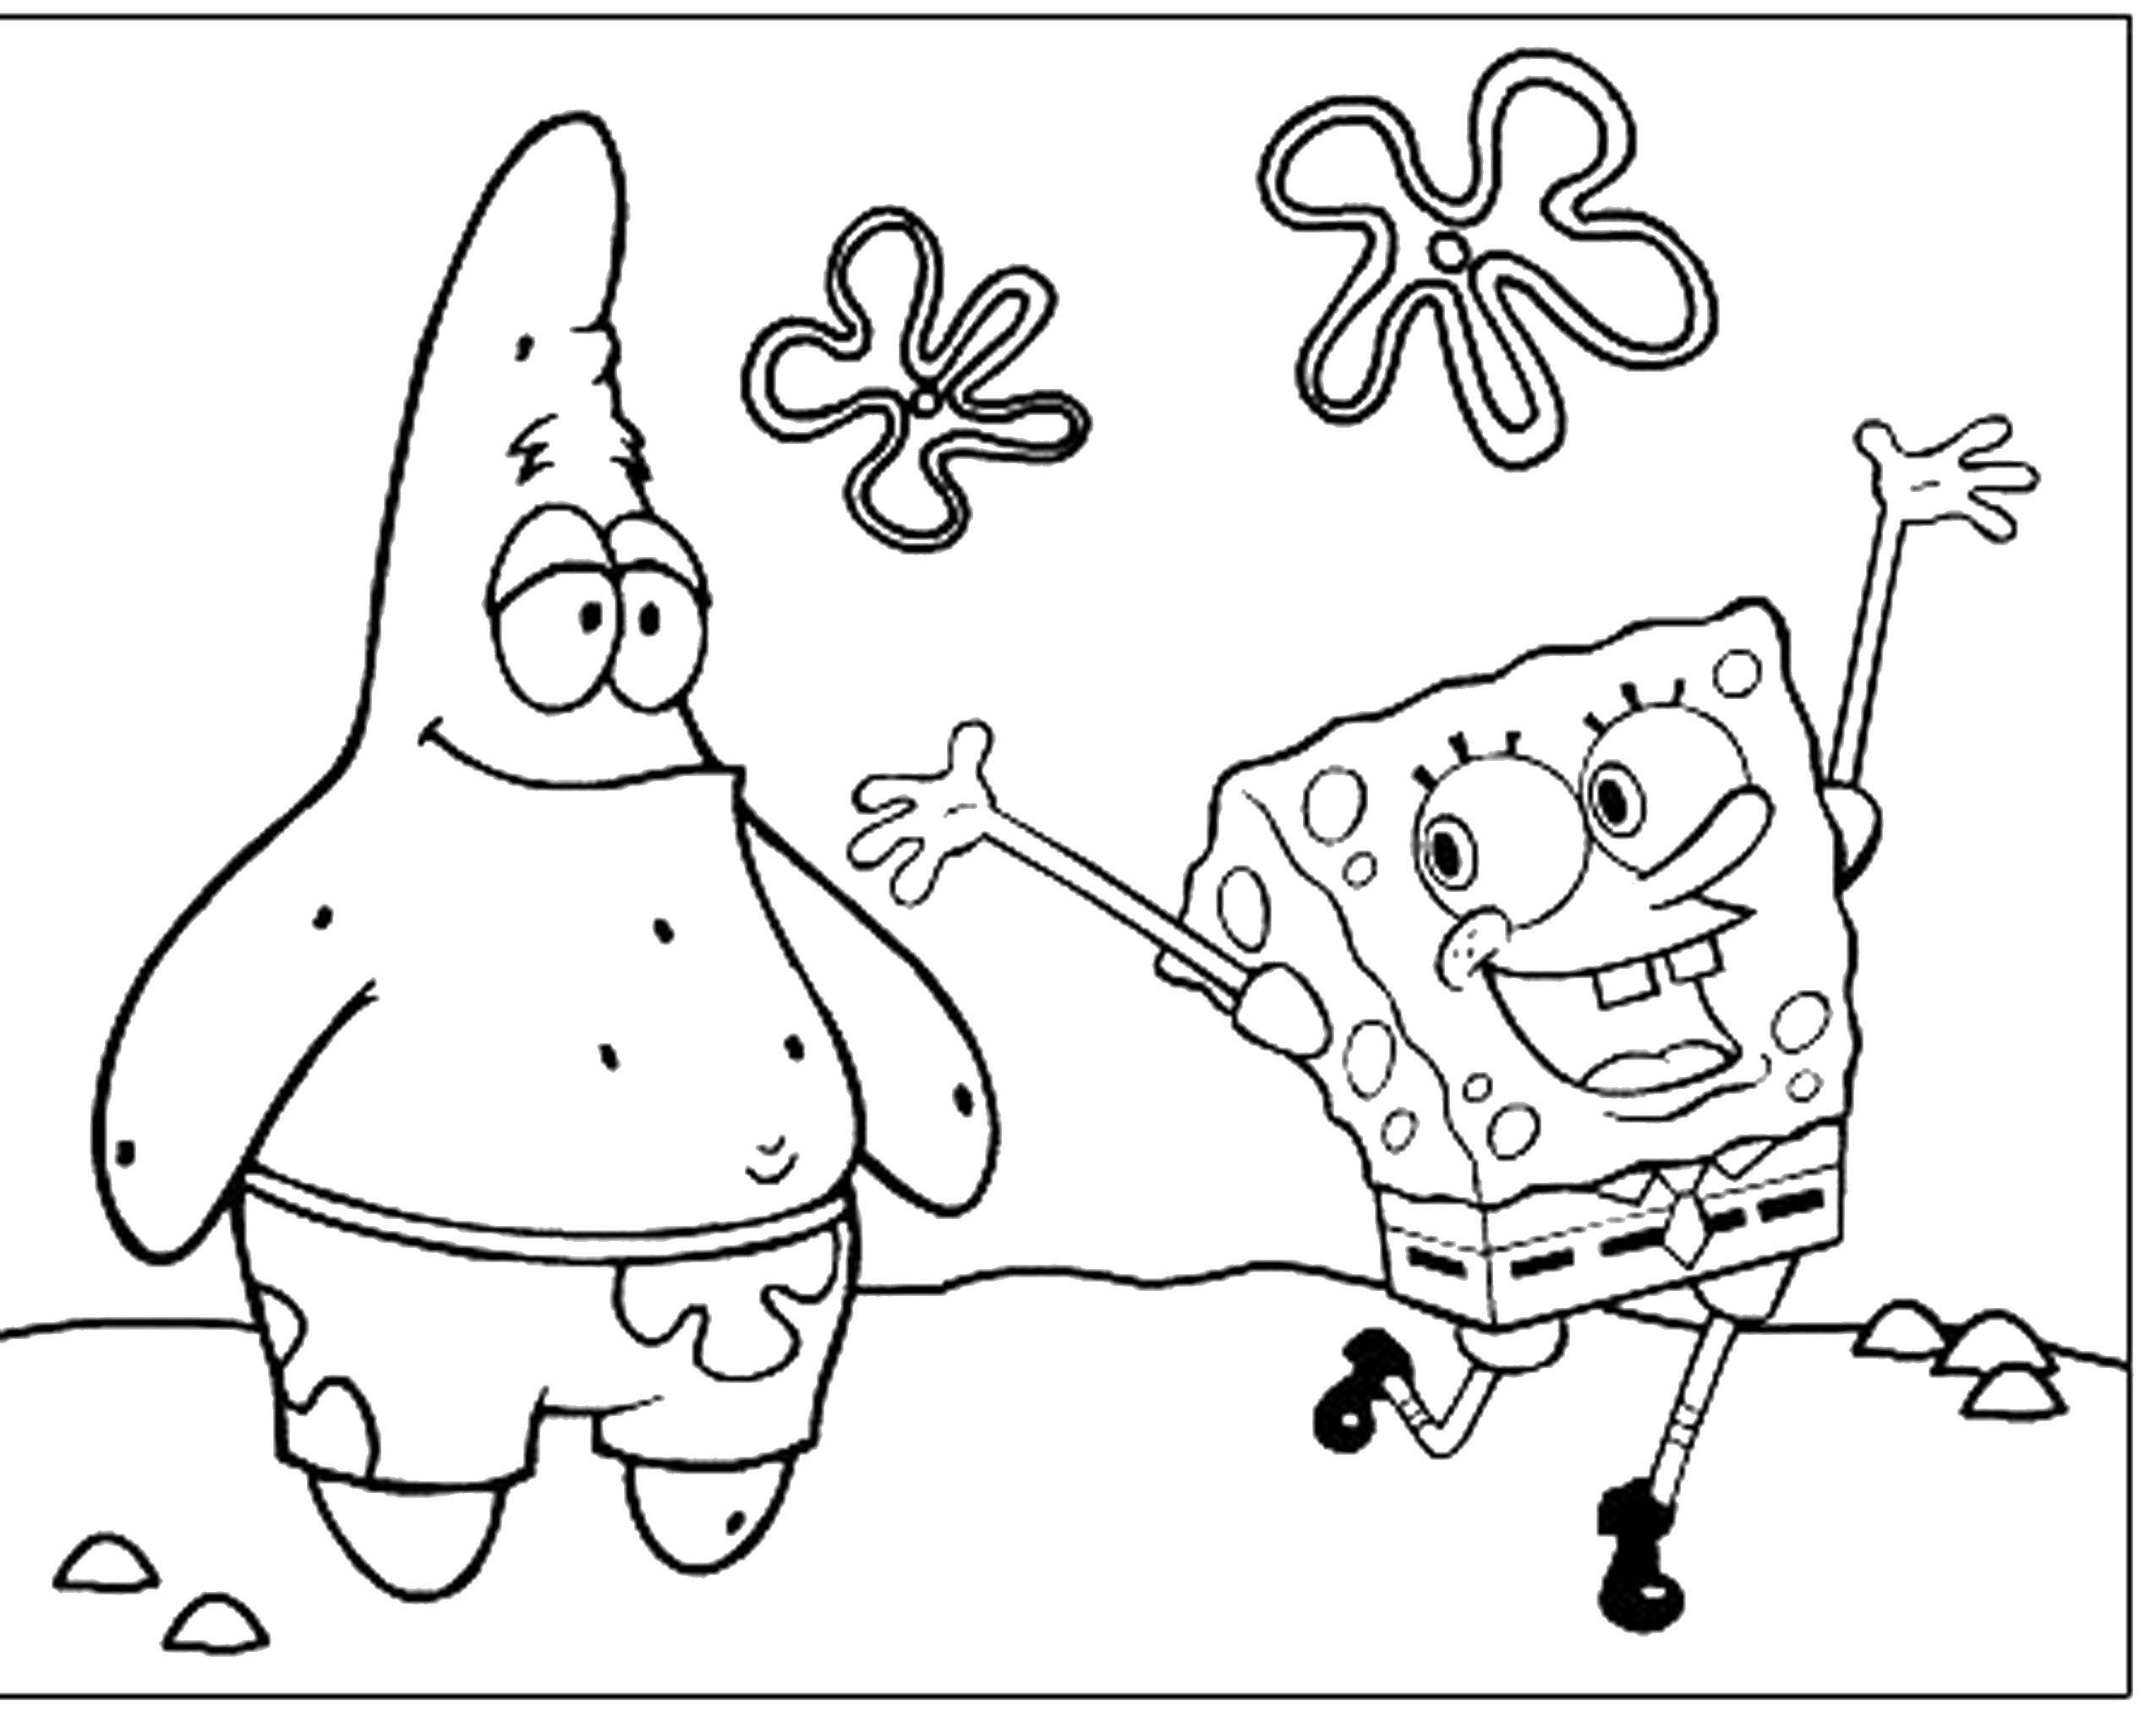 Coloring Spongebob and Patrick have fun. Category Spongebob. Tags:  Cartoon character.